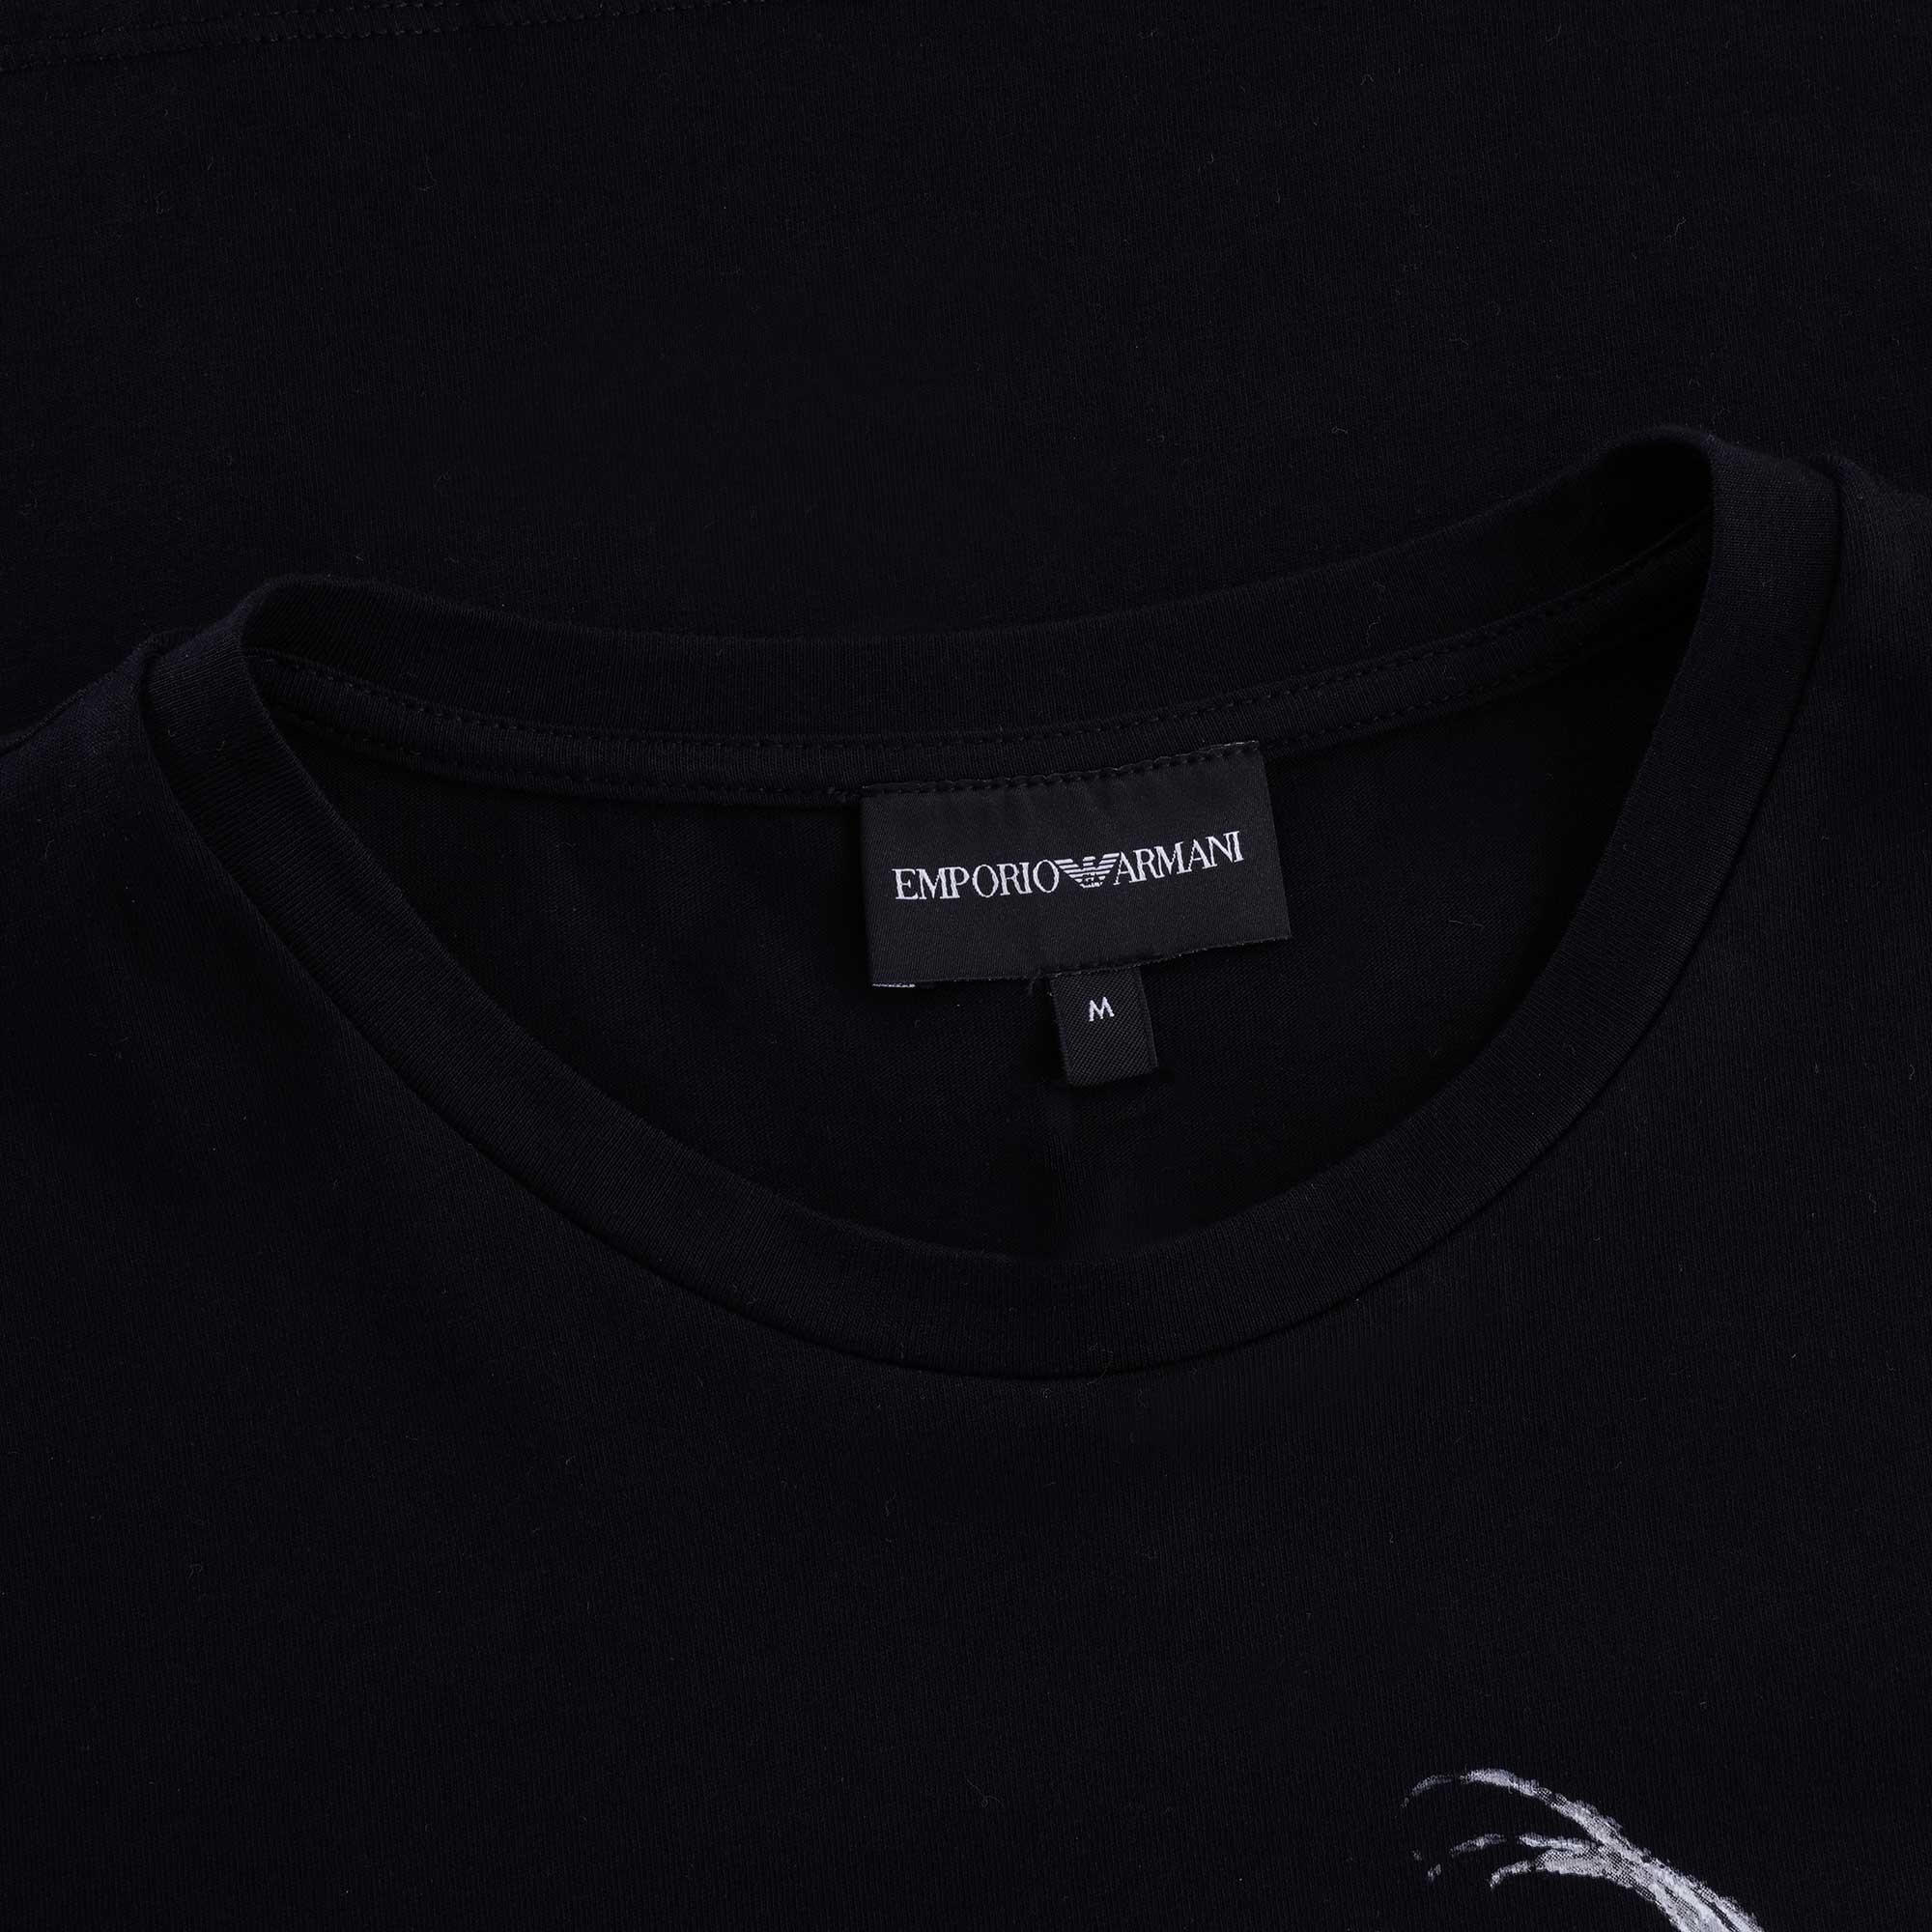 Emporio Armani Cotton Lion Print Tattoo Style Jersey T Shirt in Nero  (Black) for Men - Lyst